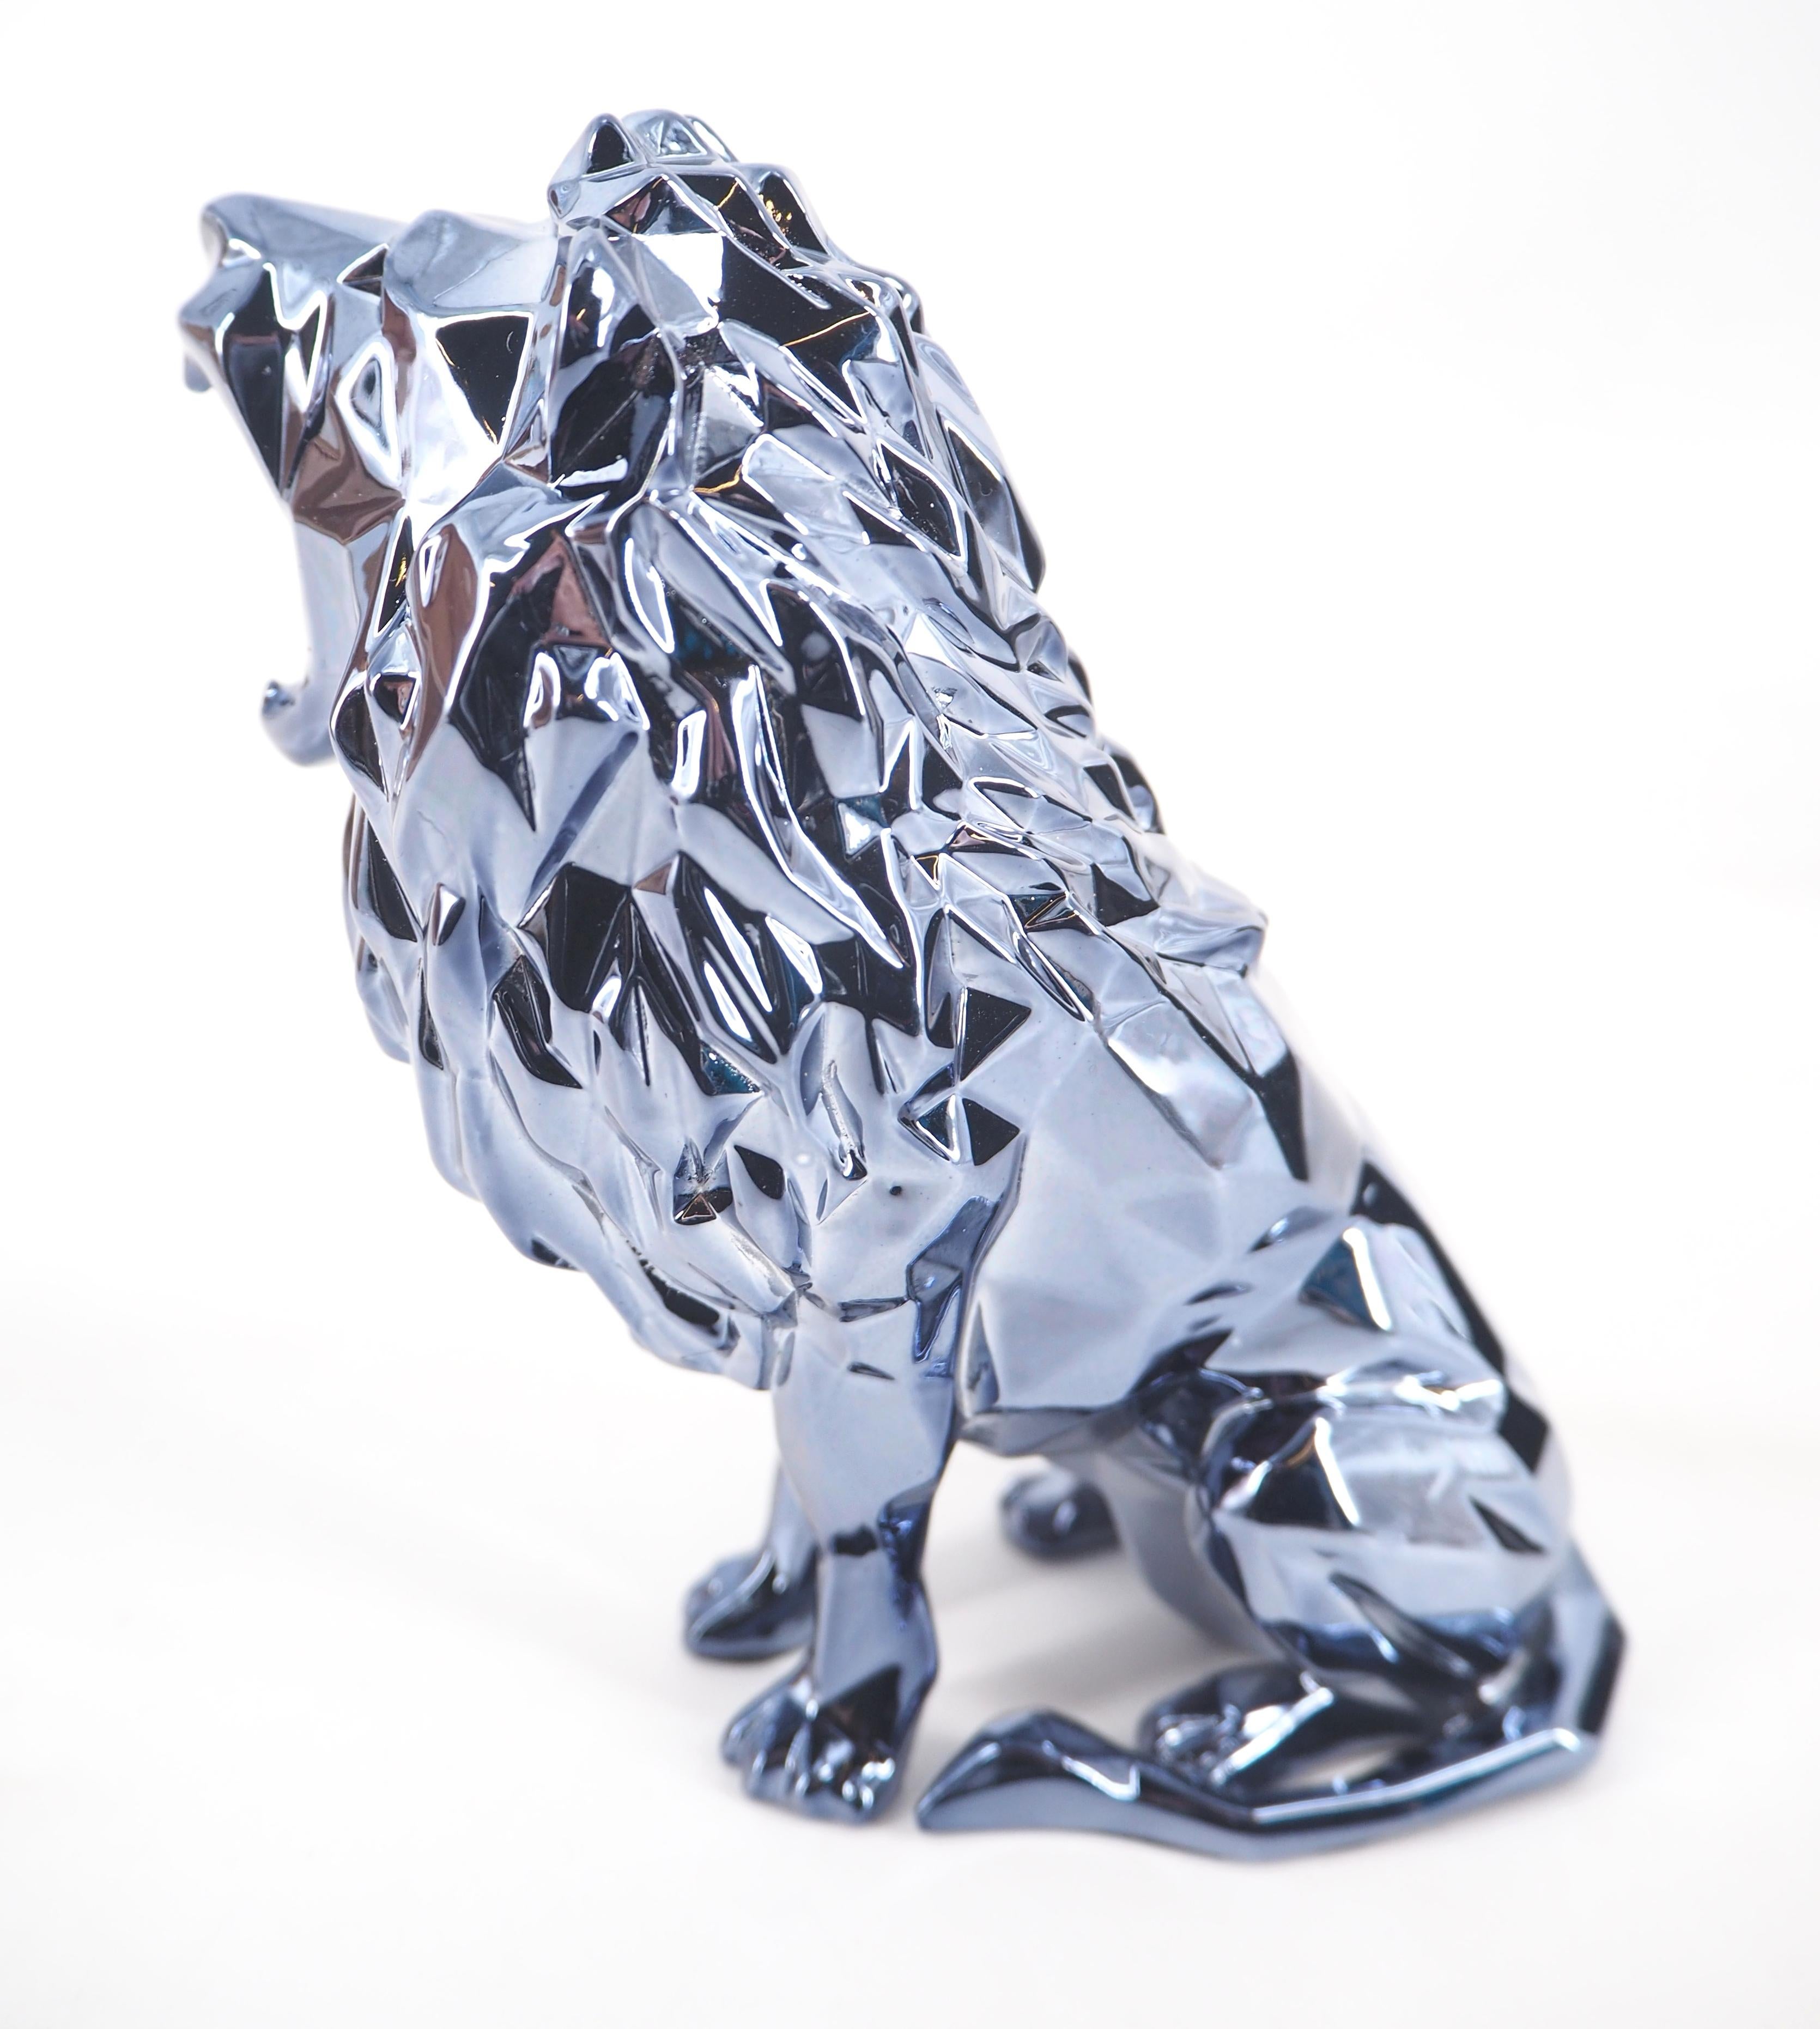 Roaring Lion Spirit (Petrol edition) - Sculpture 1